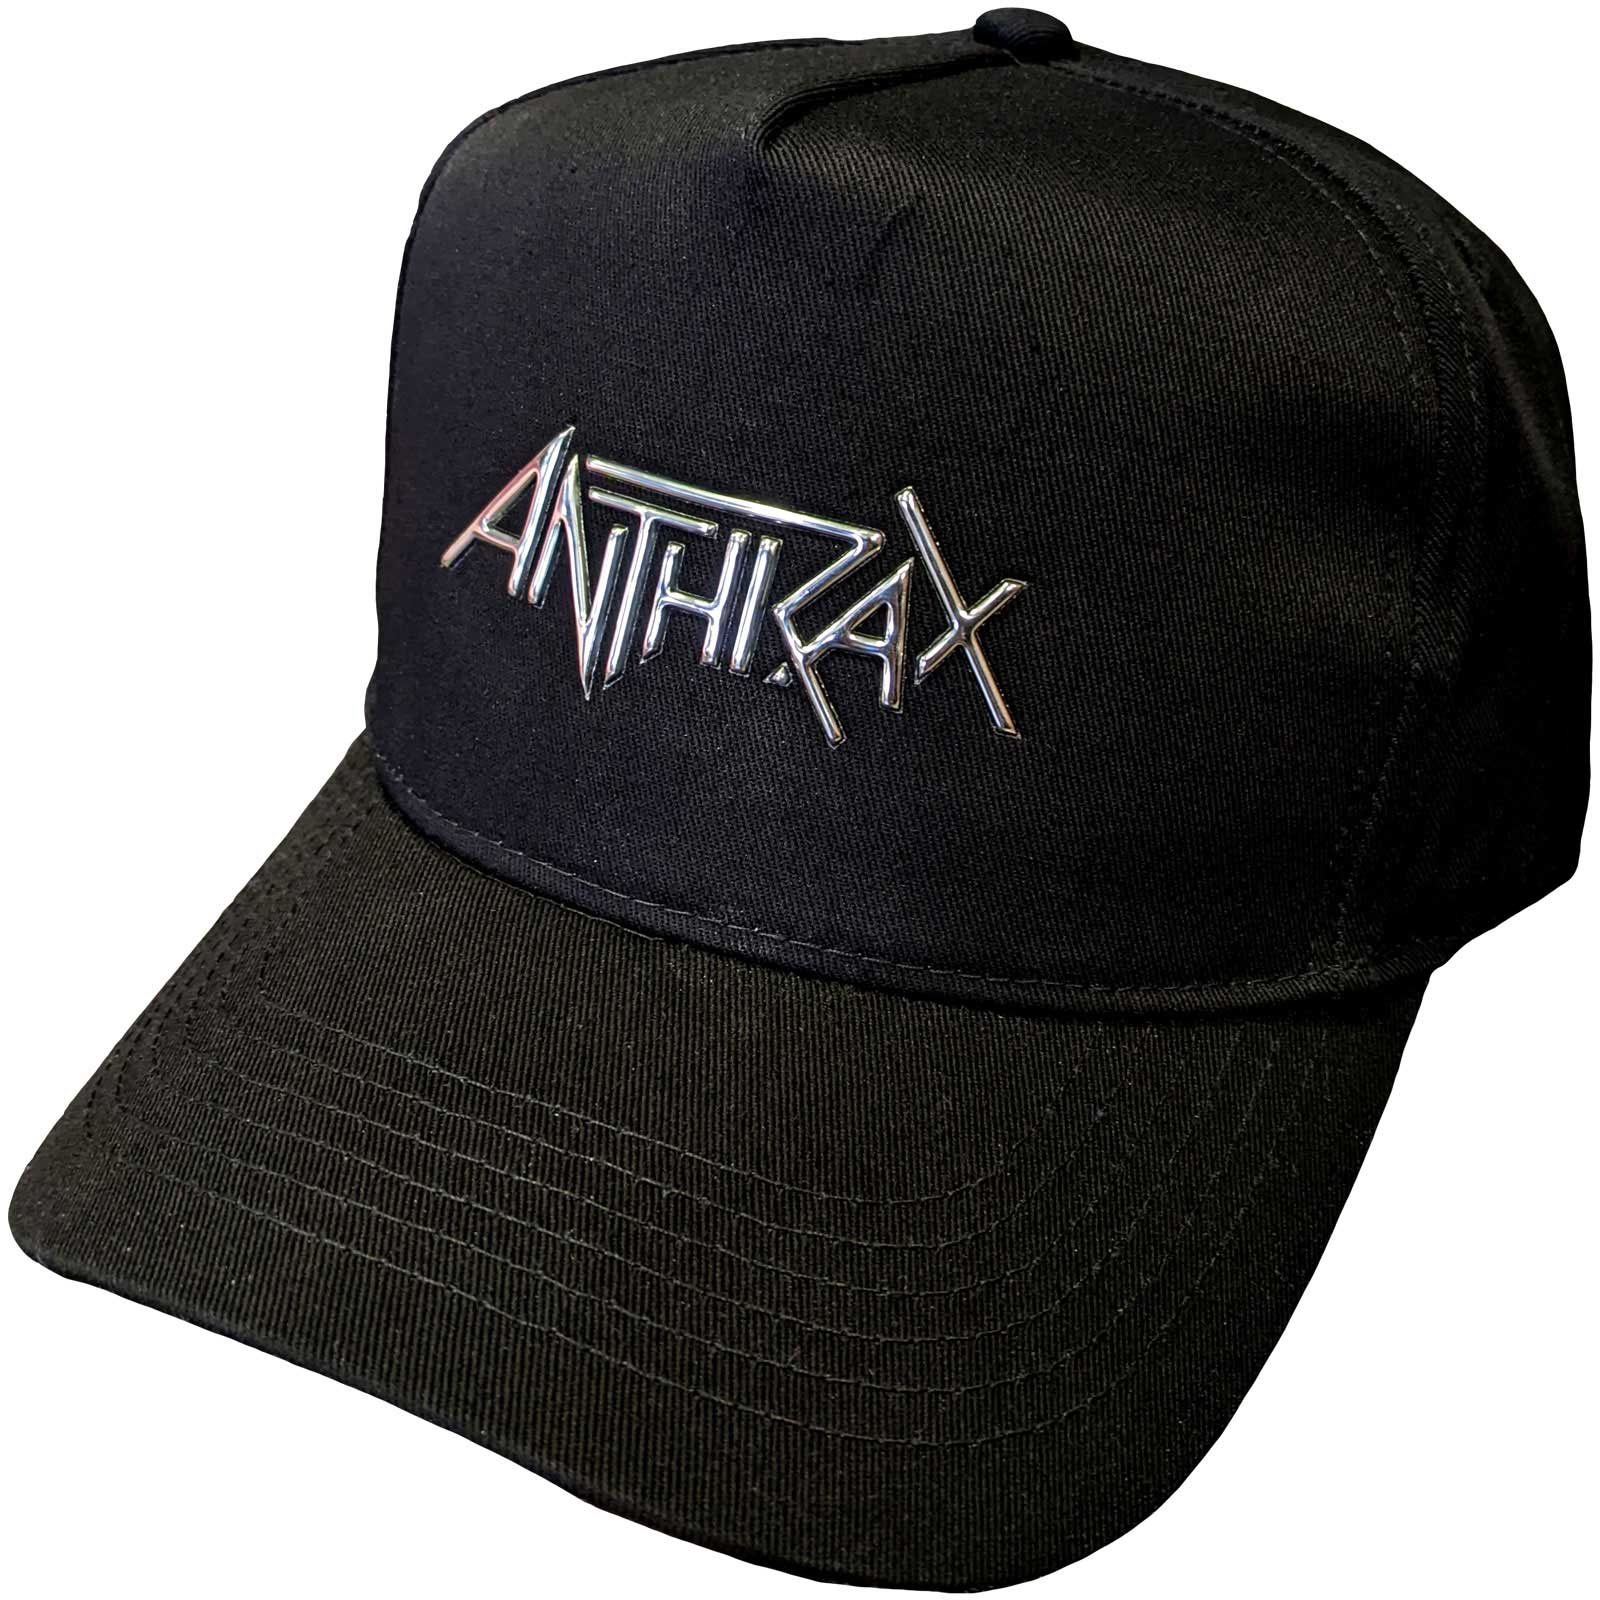 (AXbNX) Anthrax ItBVi jZbNX S Lbv Xq nbg yCOʔ́z